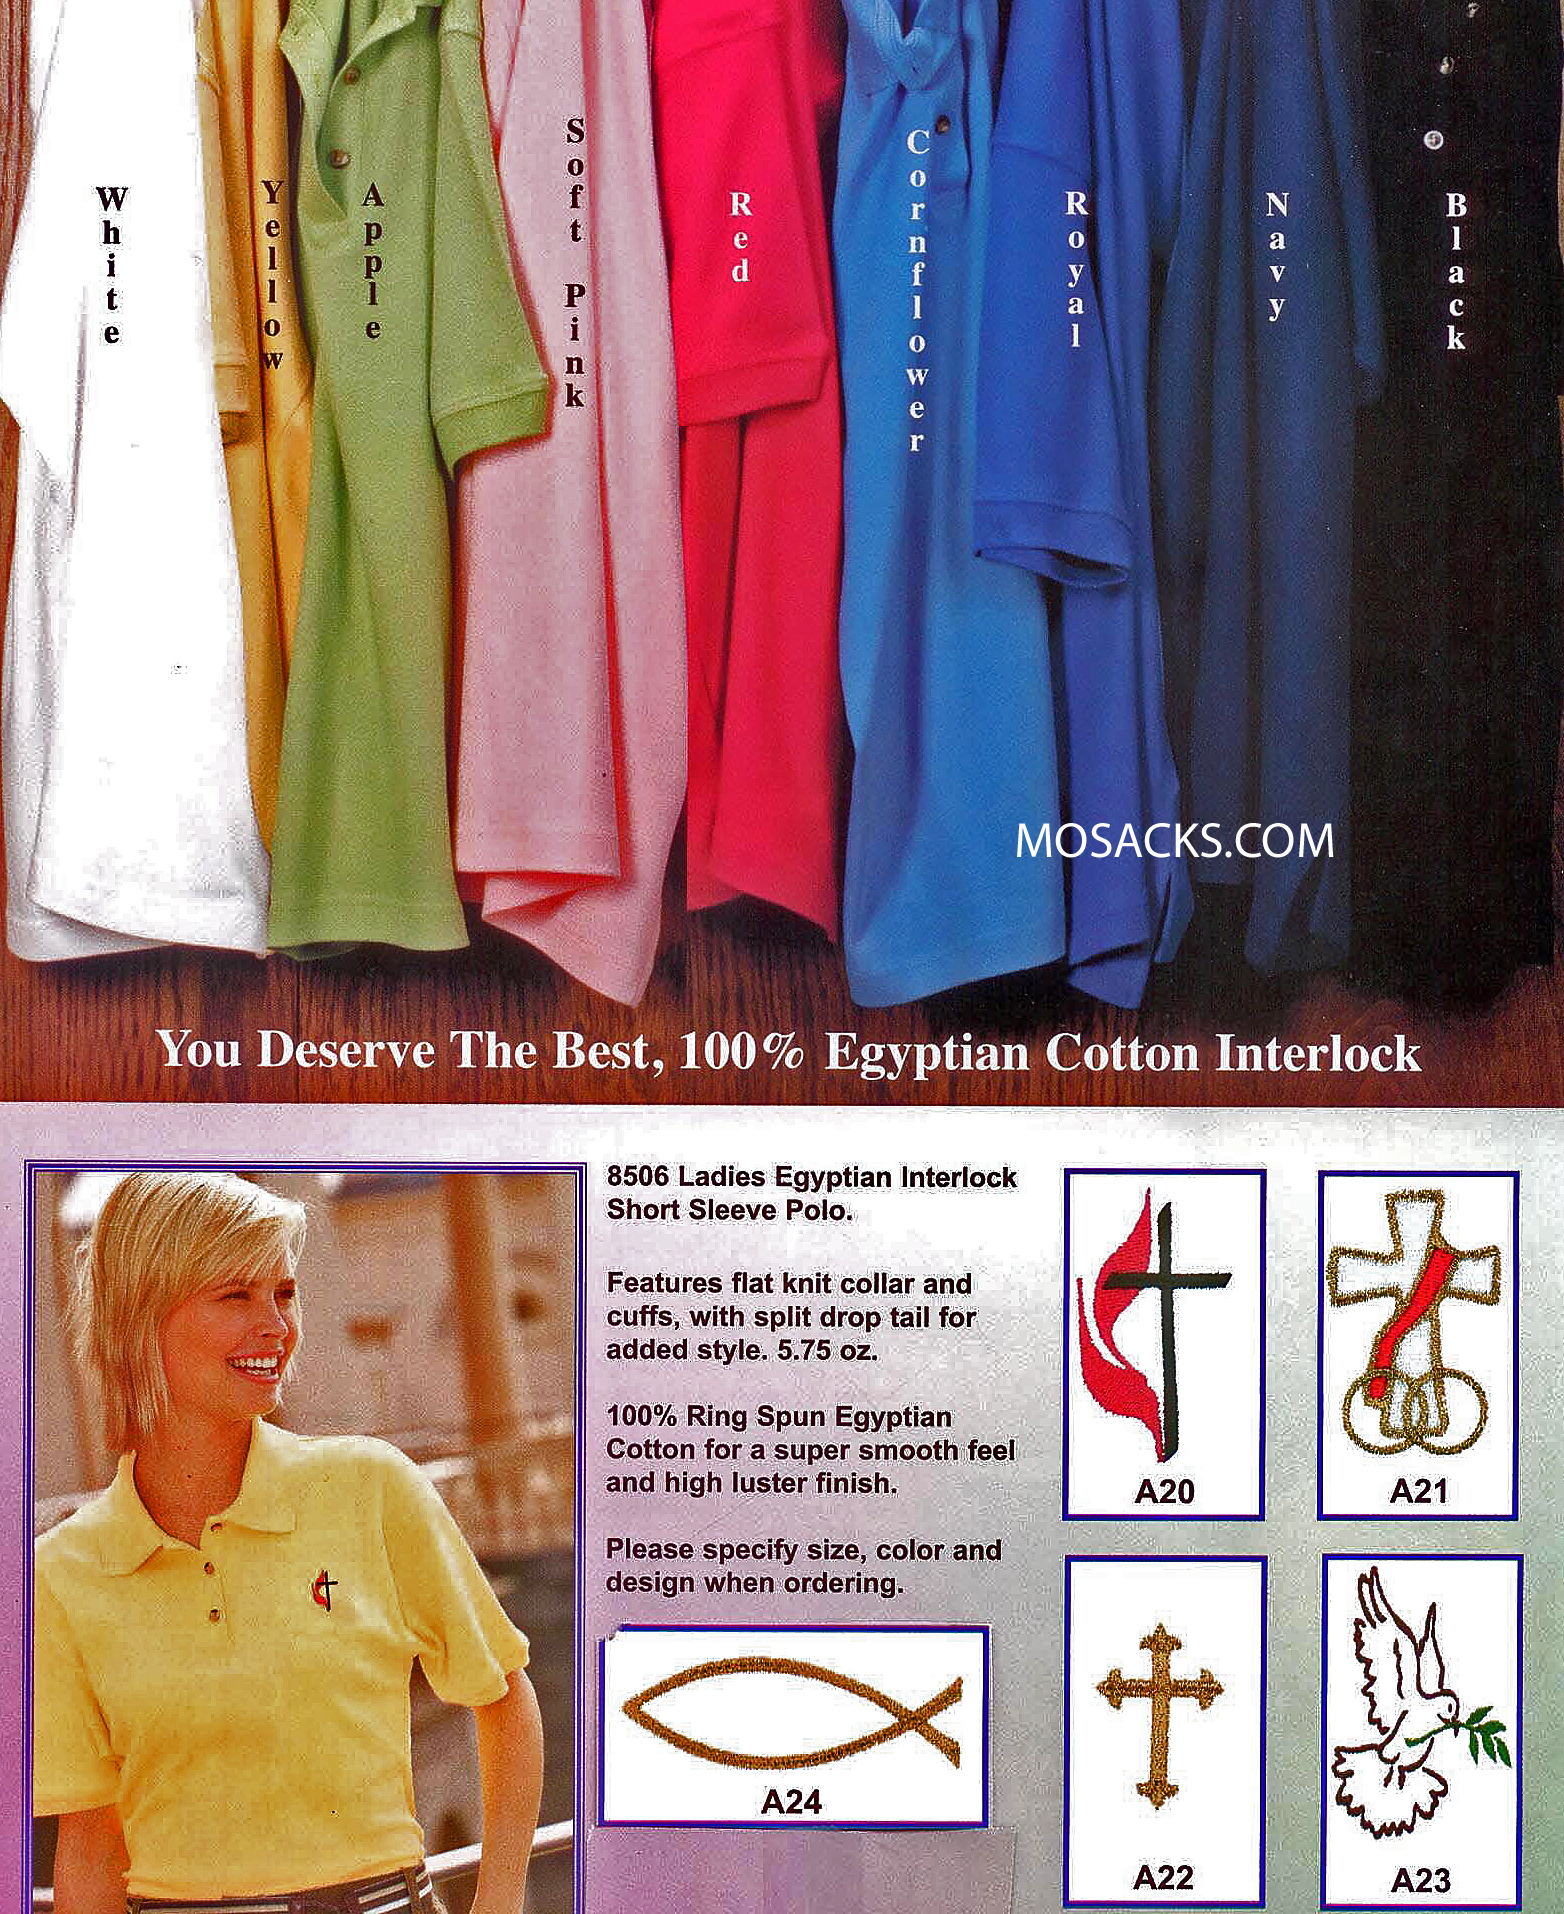 Beau Veste Women's Short Sleeve Polo Shirt 2X Large